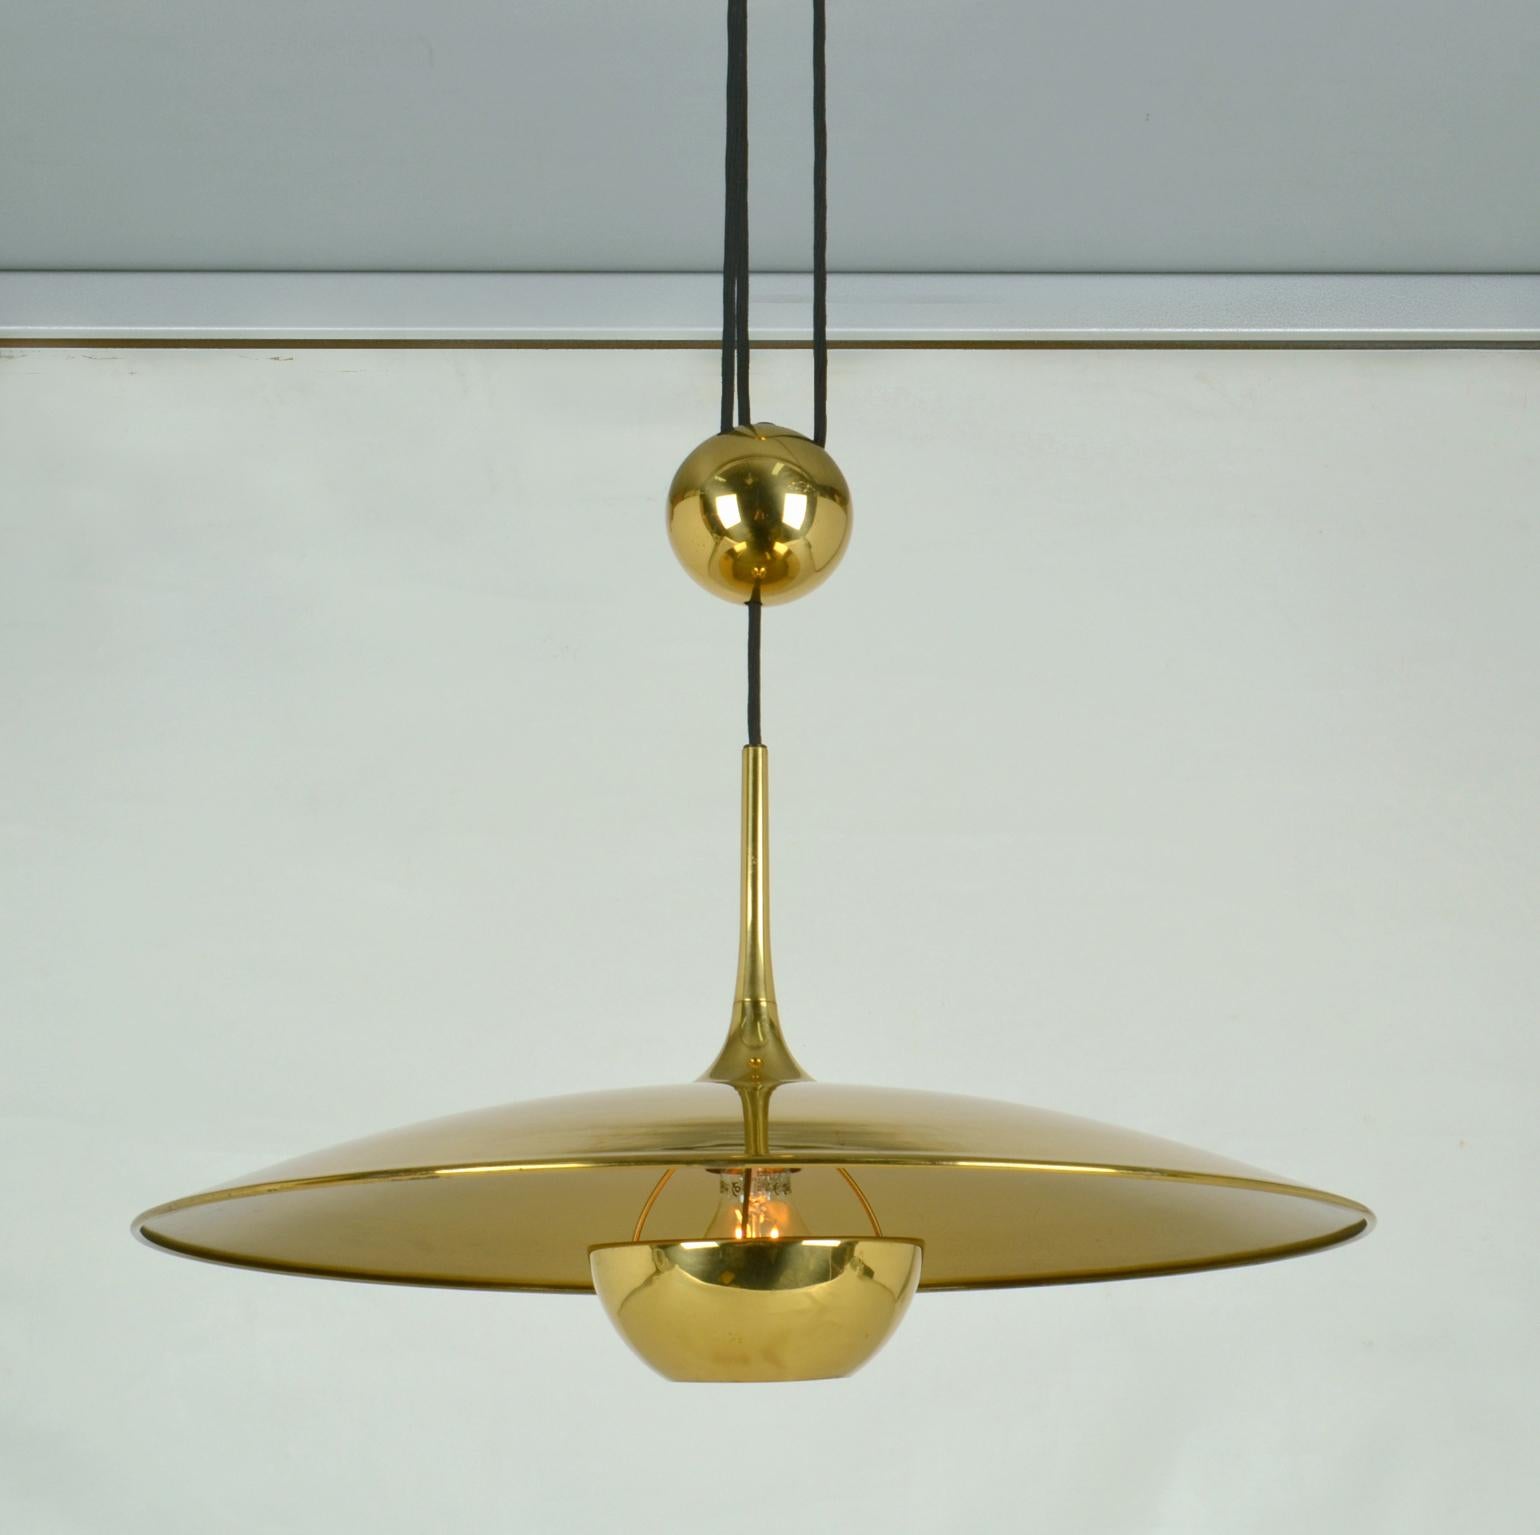 Minimalist Counterbalance Brass Pendant Onos 55 by Florian Schulz